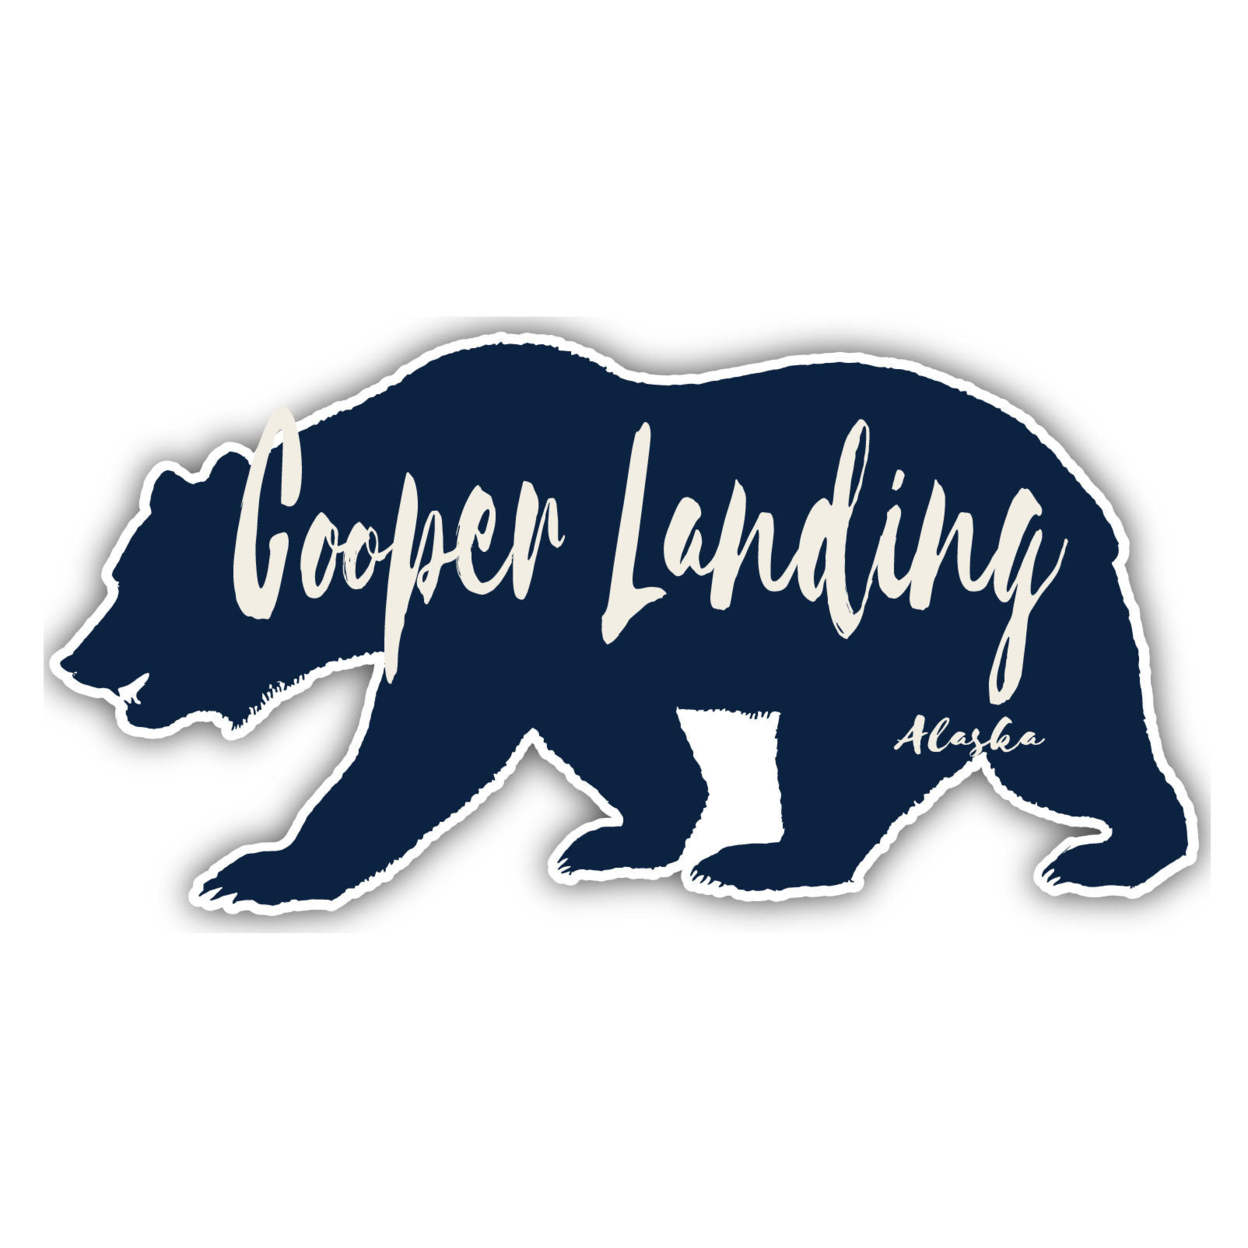 Cooper Landing Alaska Souvenir Decorative Stickers (Choose Theme And Size) - Single Unit, 10-Inch, Adventures Awaits